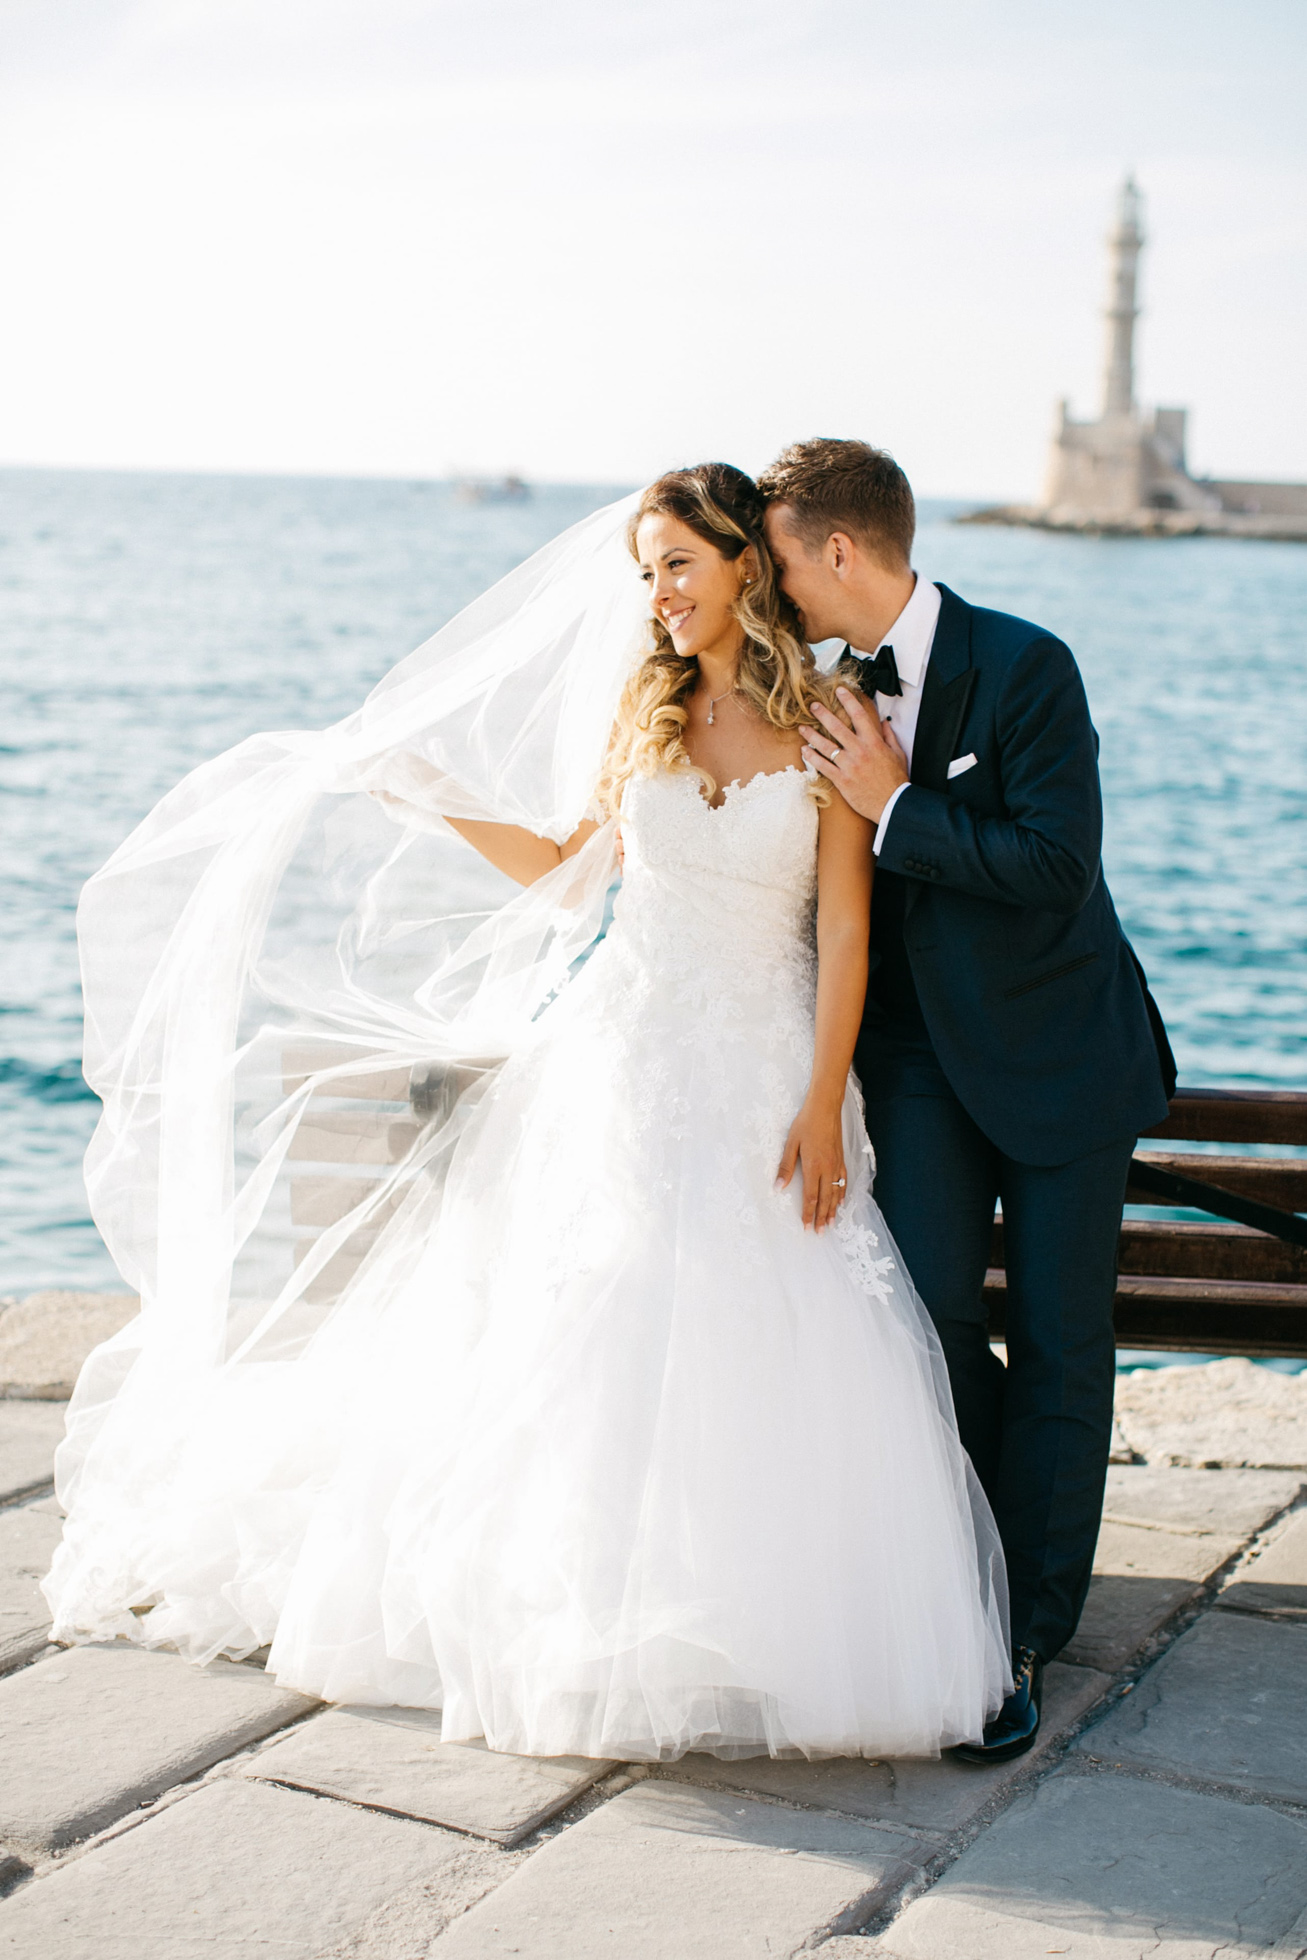 Elegant international couple on their destination wedding day in Chania Crete Greece.